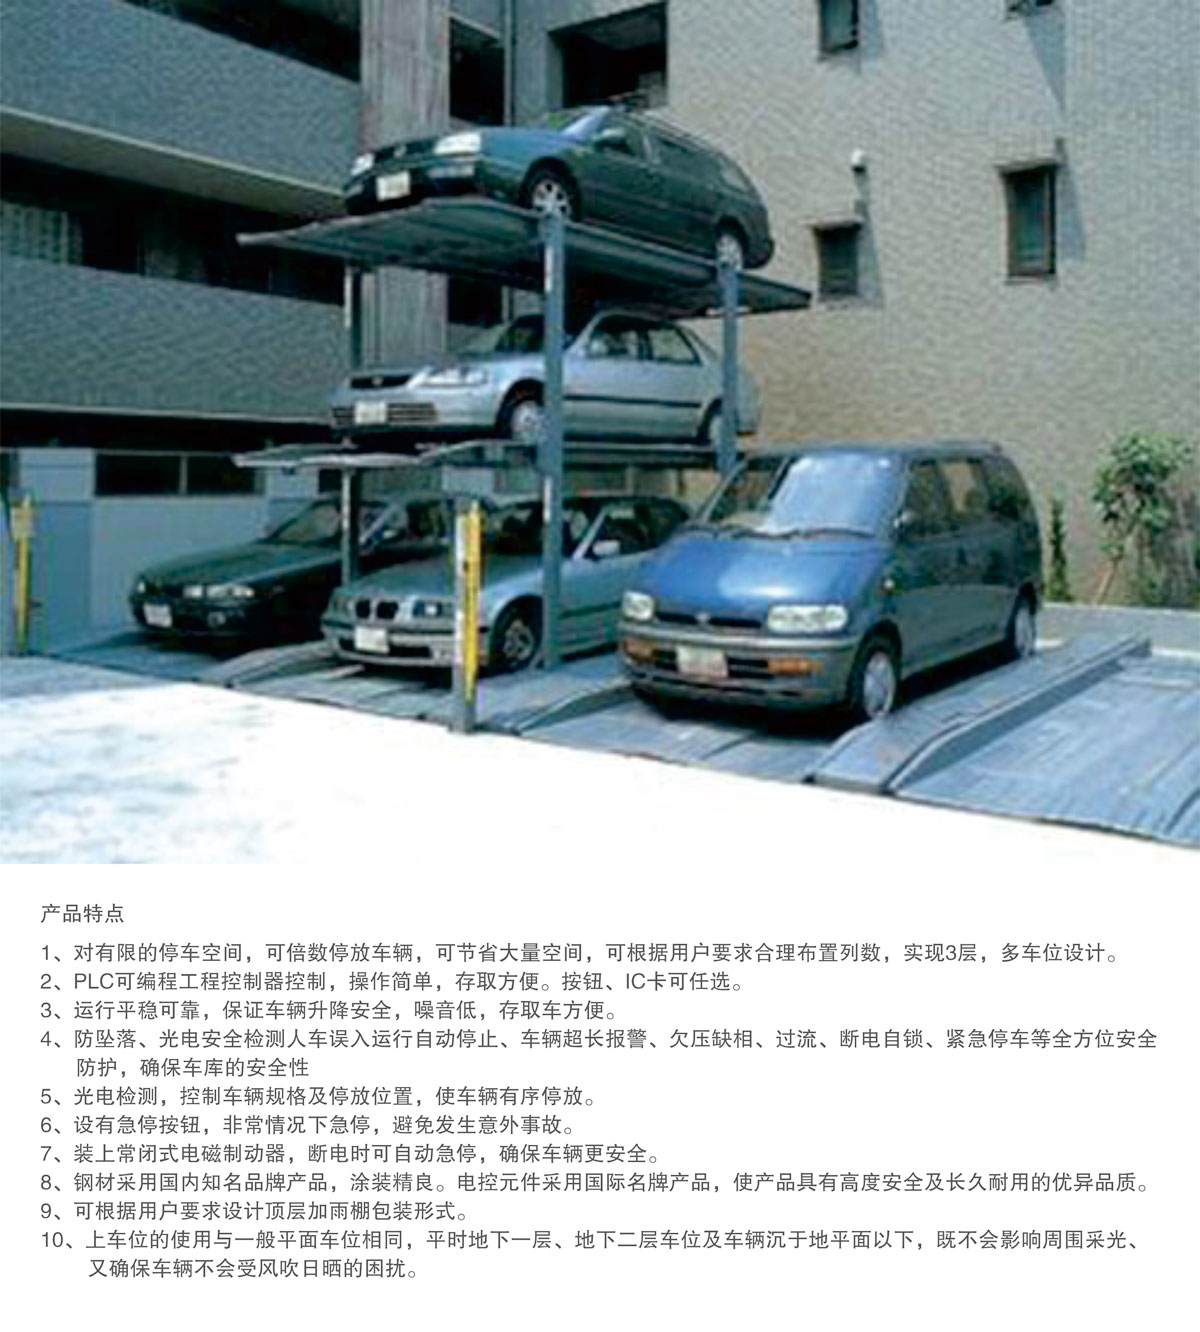 07PJS3D2三层地坑简易升降机械式停车设备产品特点.jpg